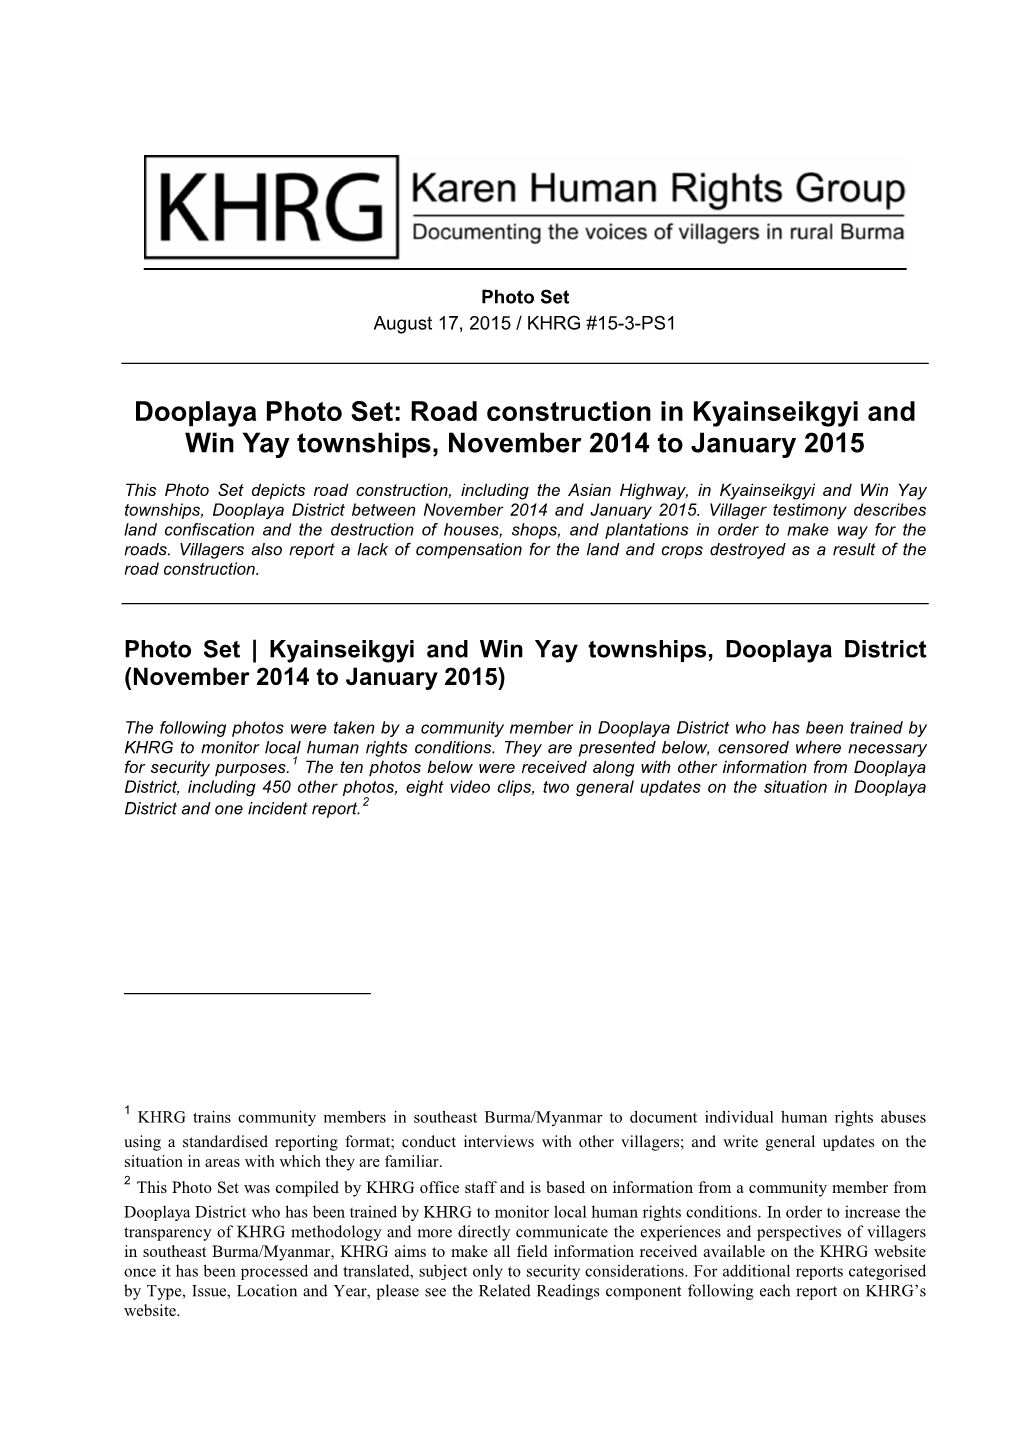 Road Construction in Kyainseikgyi and Win Yay Townships, November 2014 to January 2015